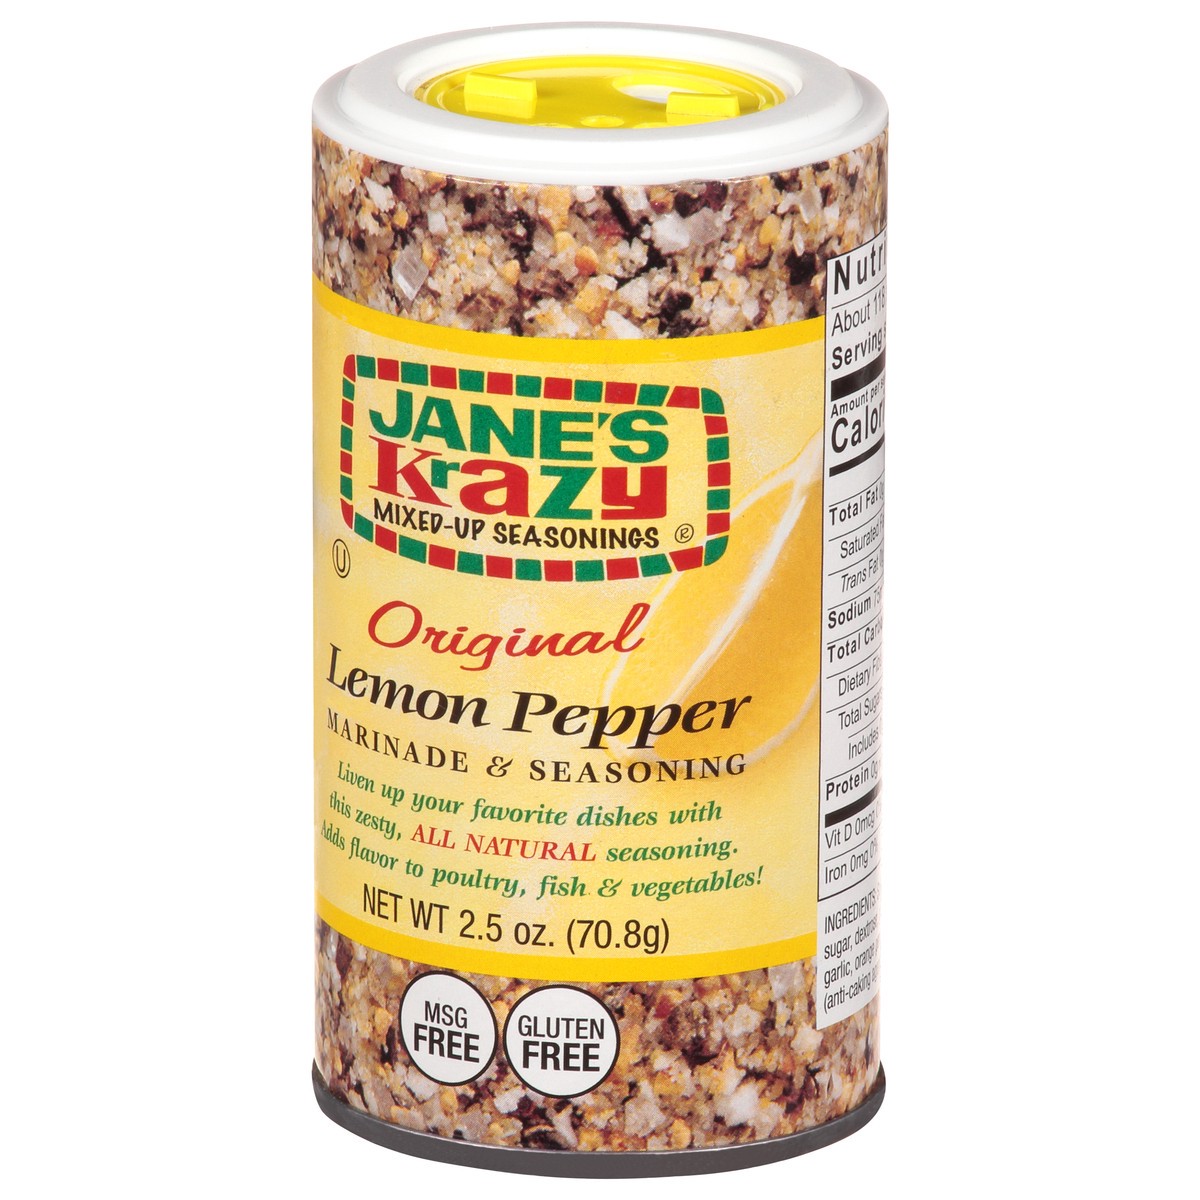 slide 6 of 12, Jane's Krazy Mixed-Up Seasonings Original Lemon Pepper Marinade & Seasoning 2.5 oz, 2.5 oz